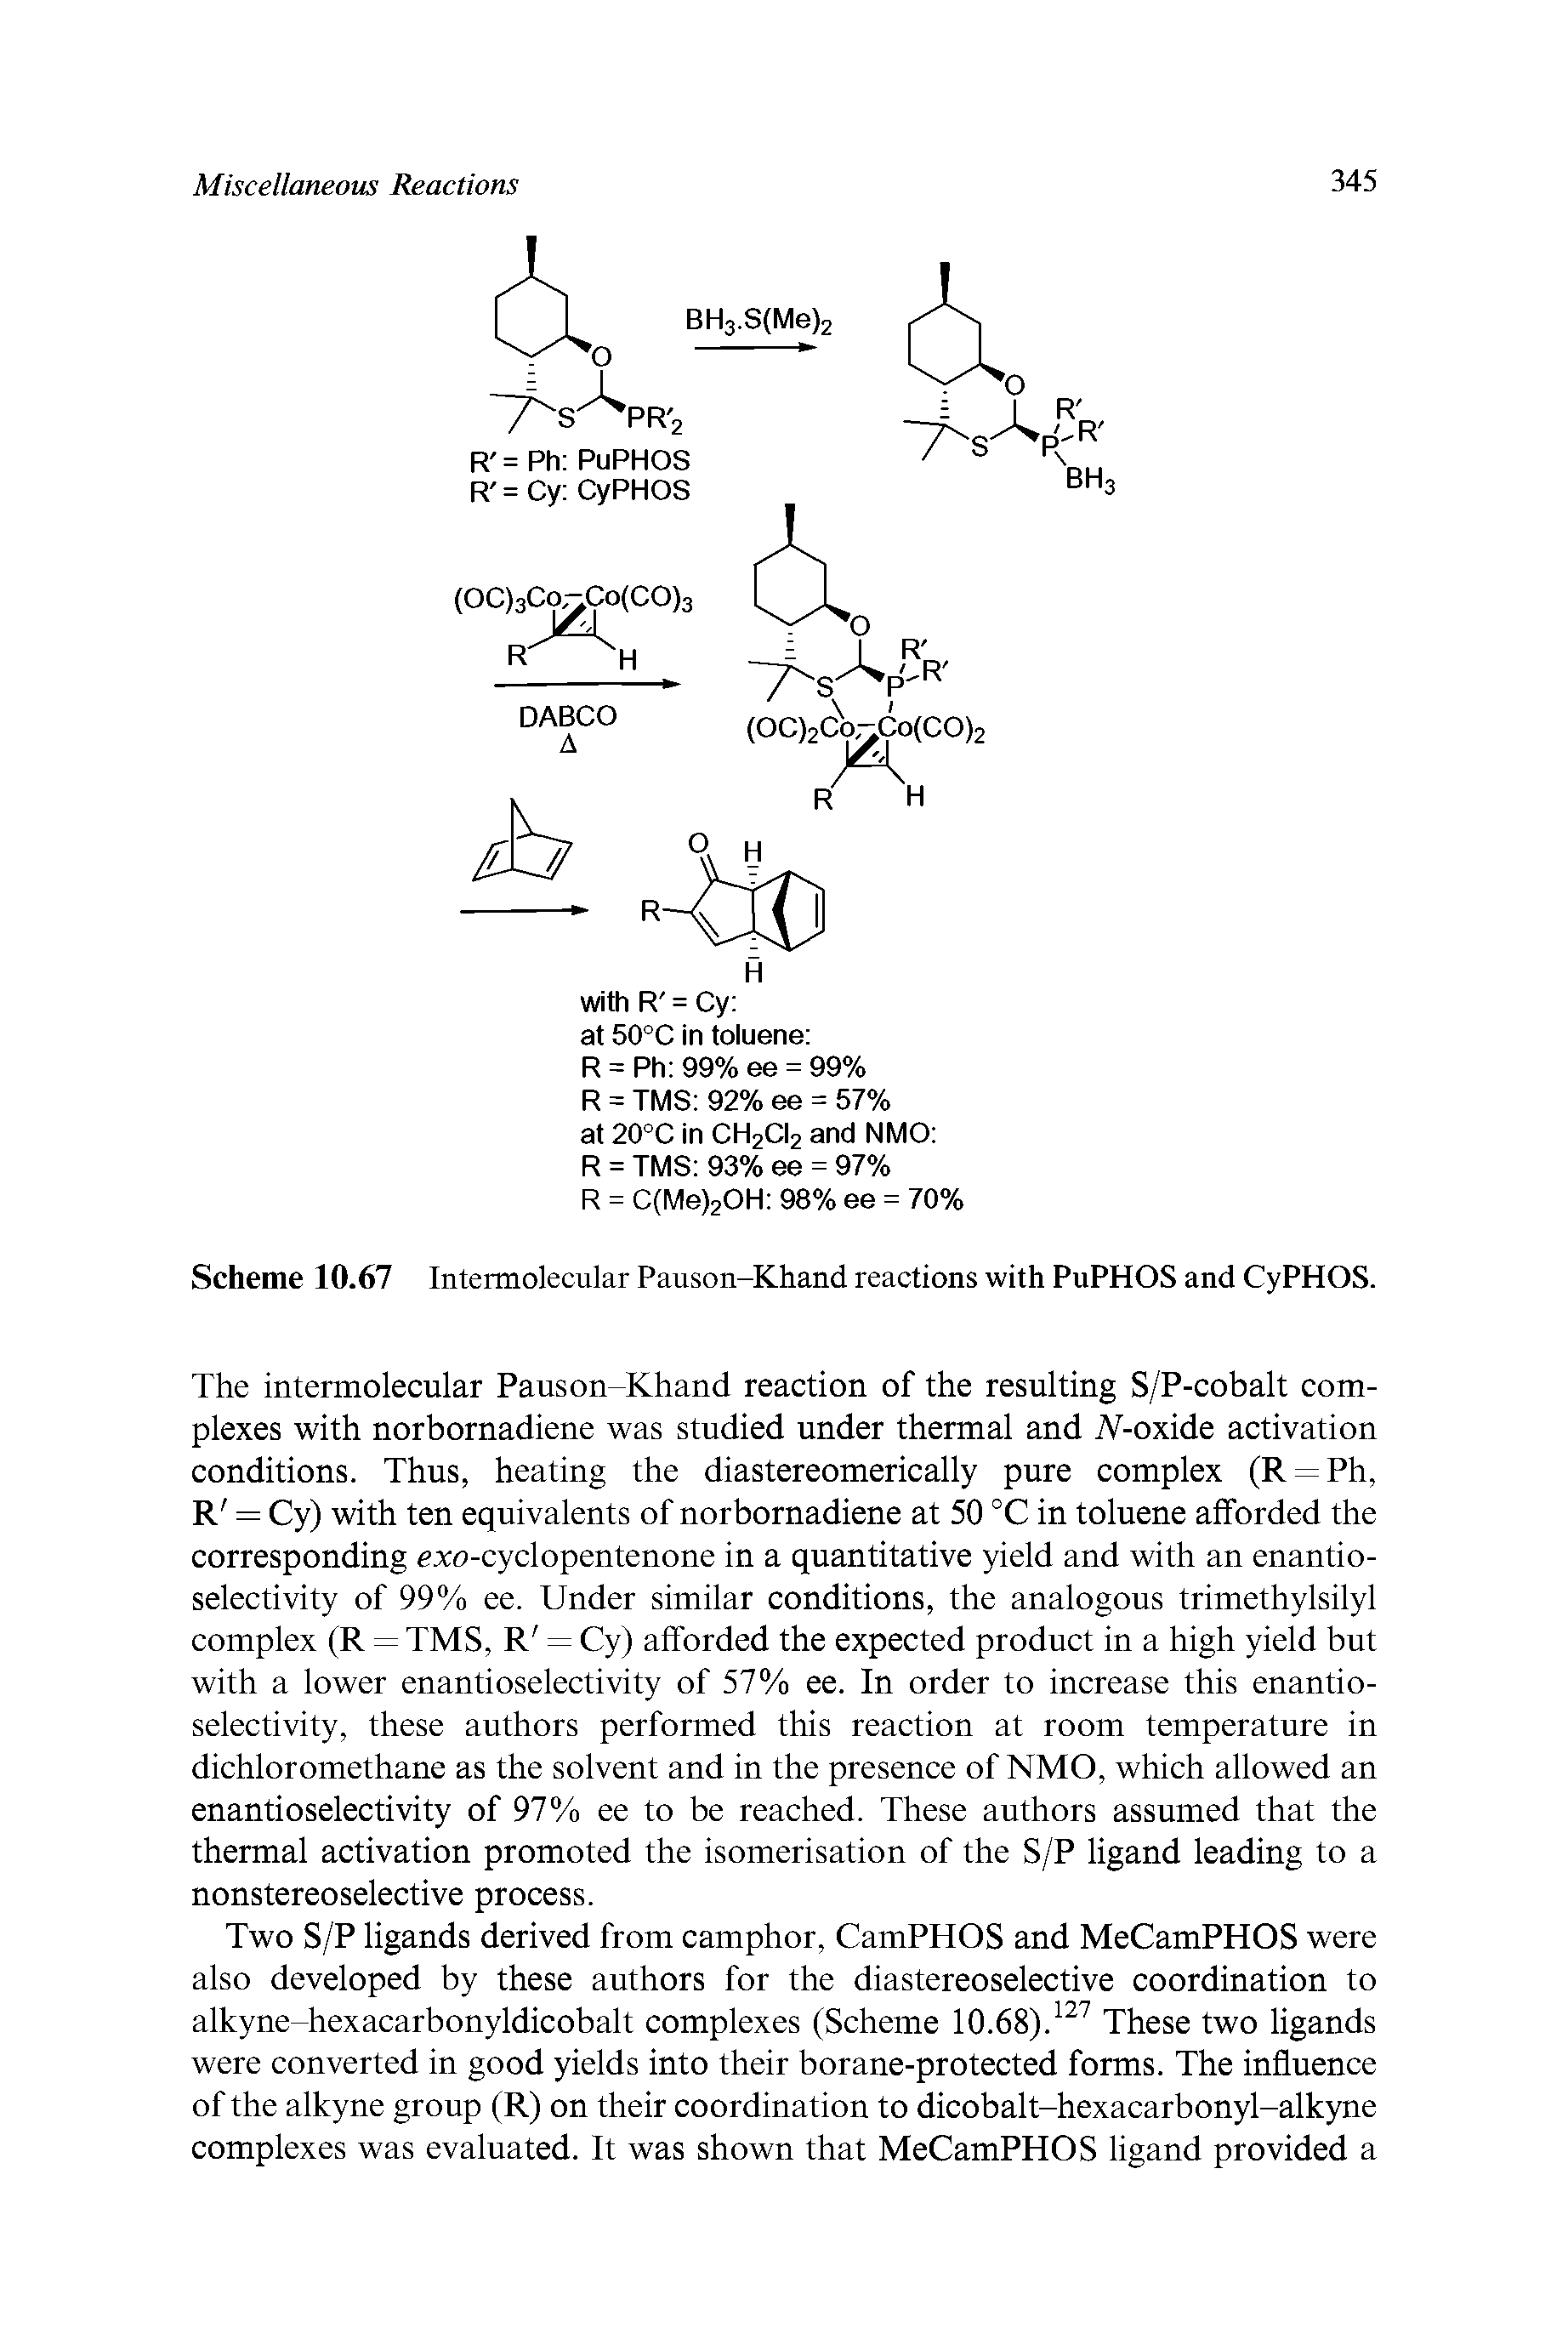 Scheme 10.67 Intermolecular Pauson-Khand reactions with PuPHOS and CyPHOS.